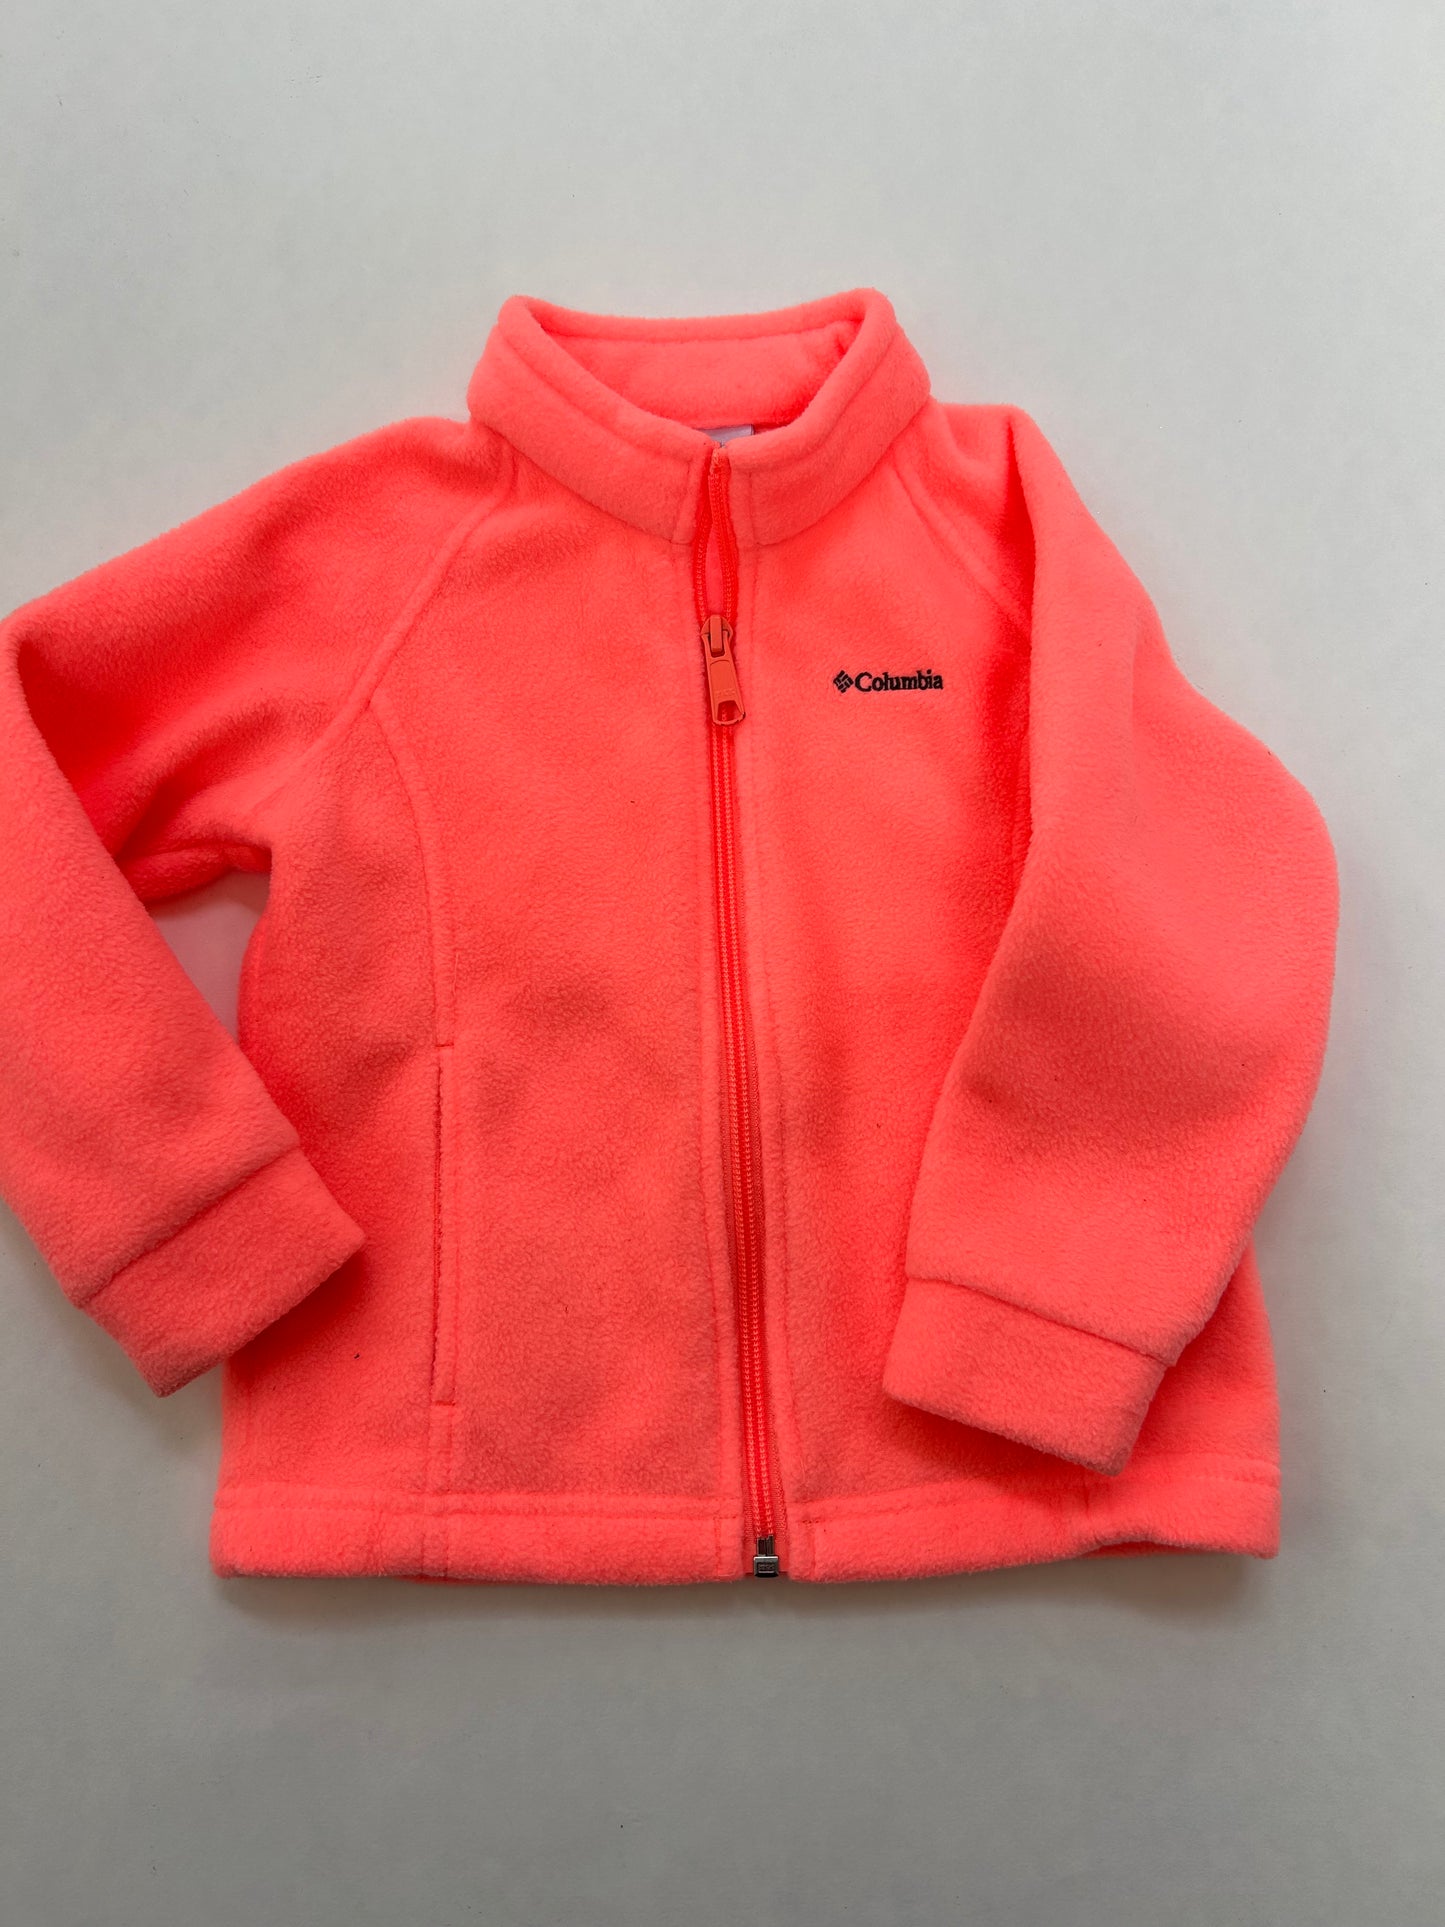 Girls 3T Columbia neon orange fleece spring jacket